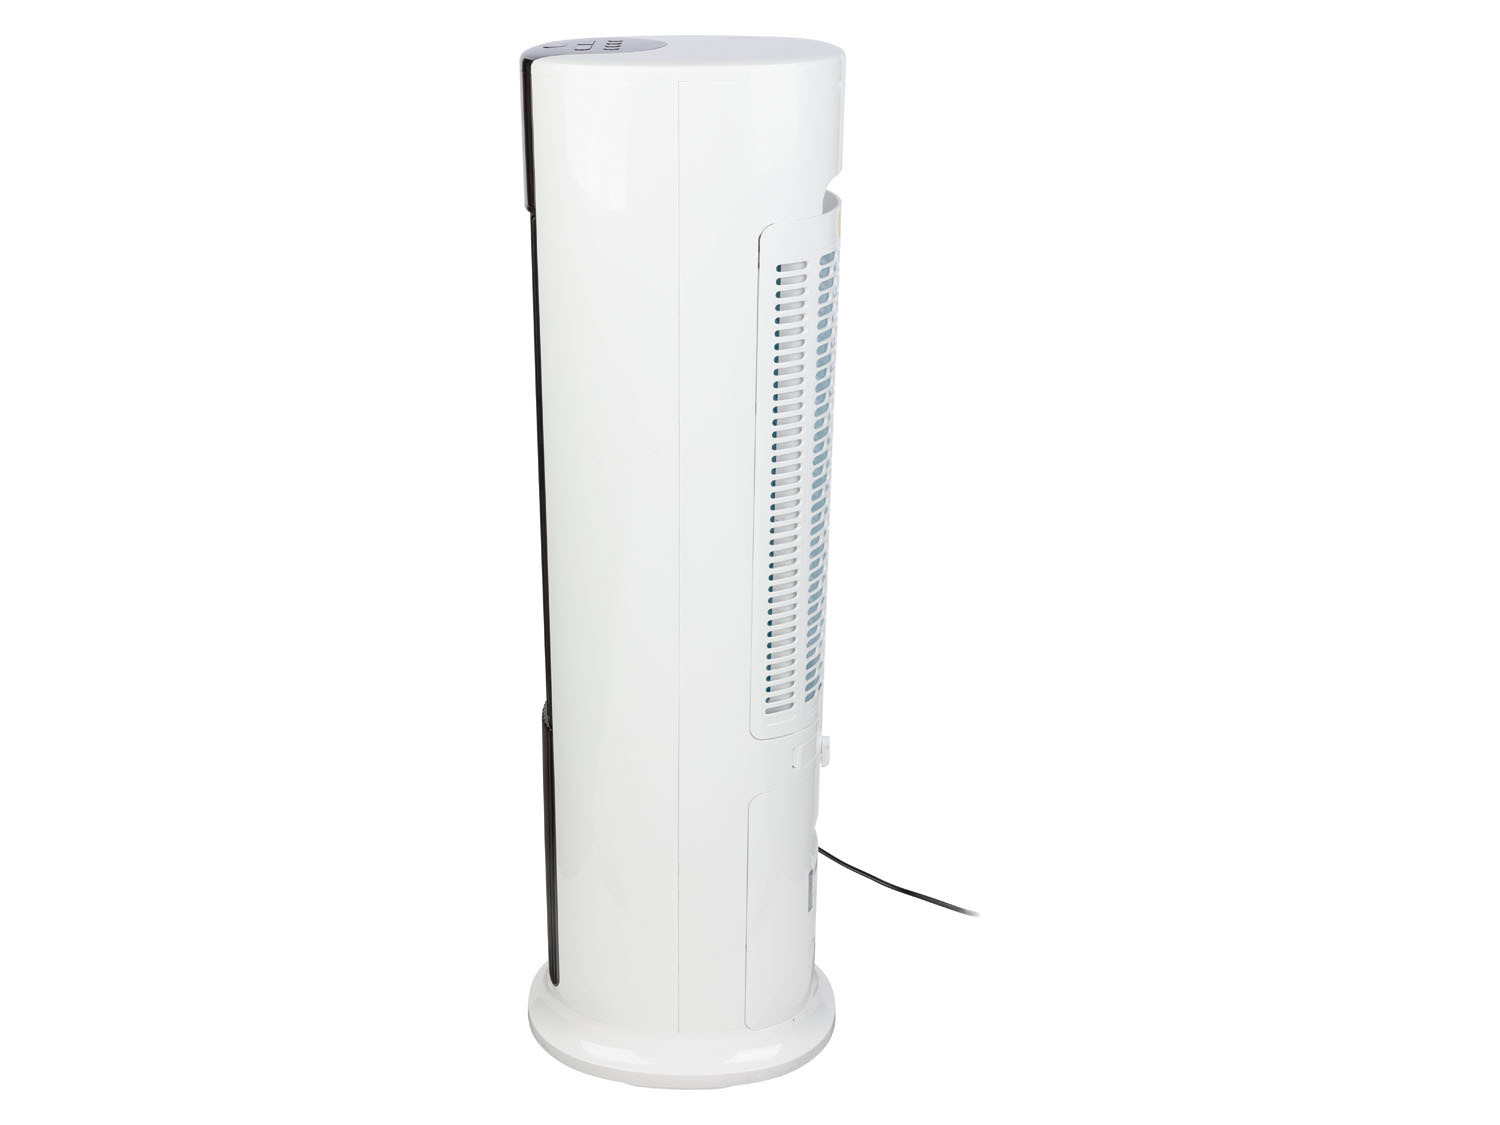 Comfee Turmventilator »Silent Air Cooler« H 105 cm oszillierend ZN8871